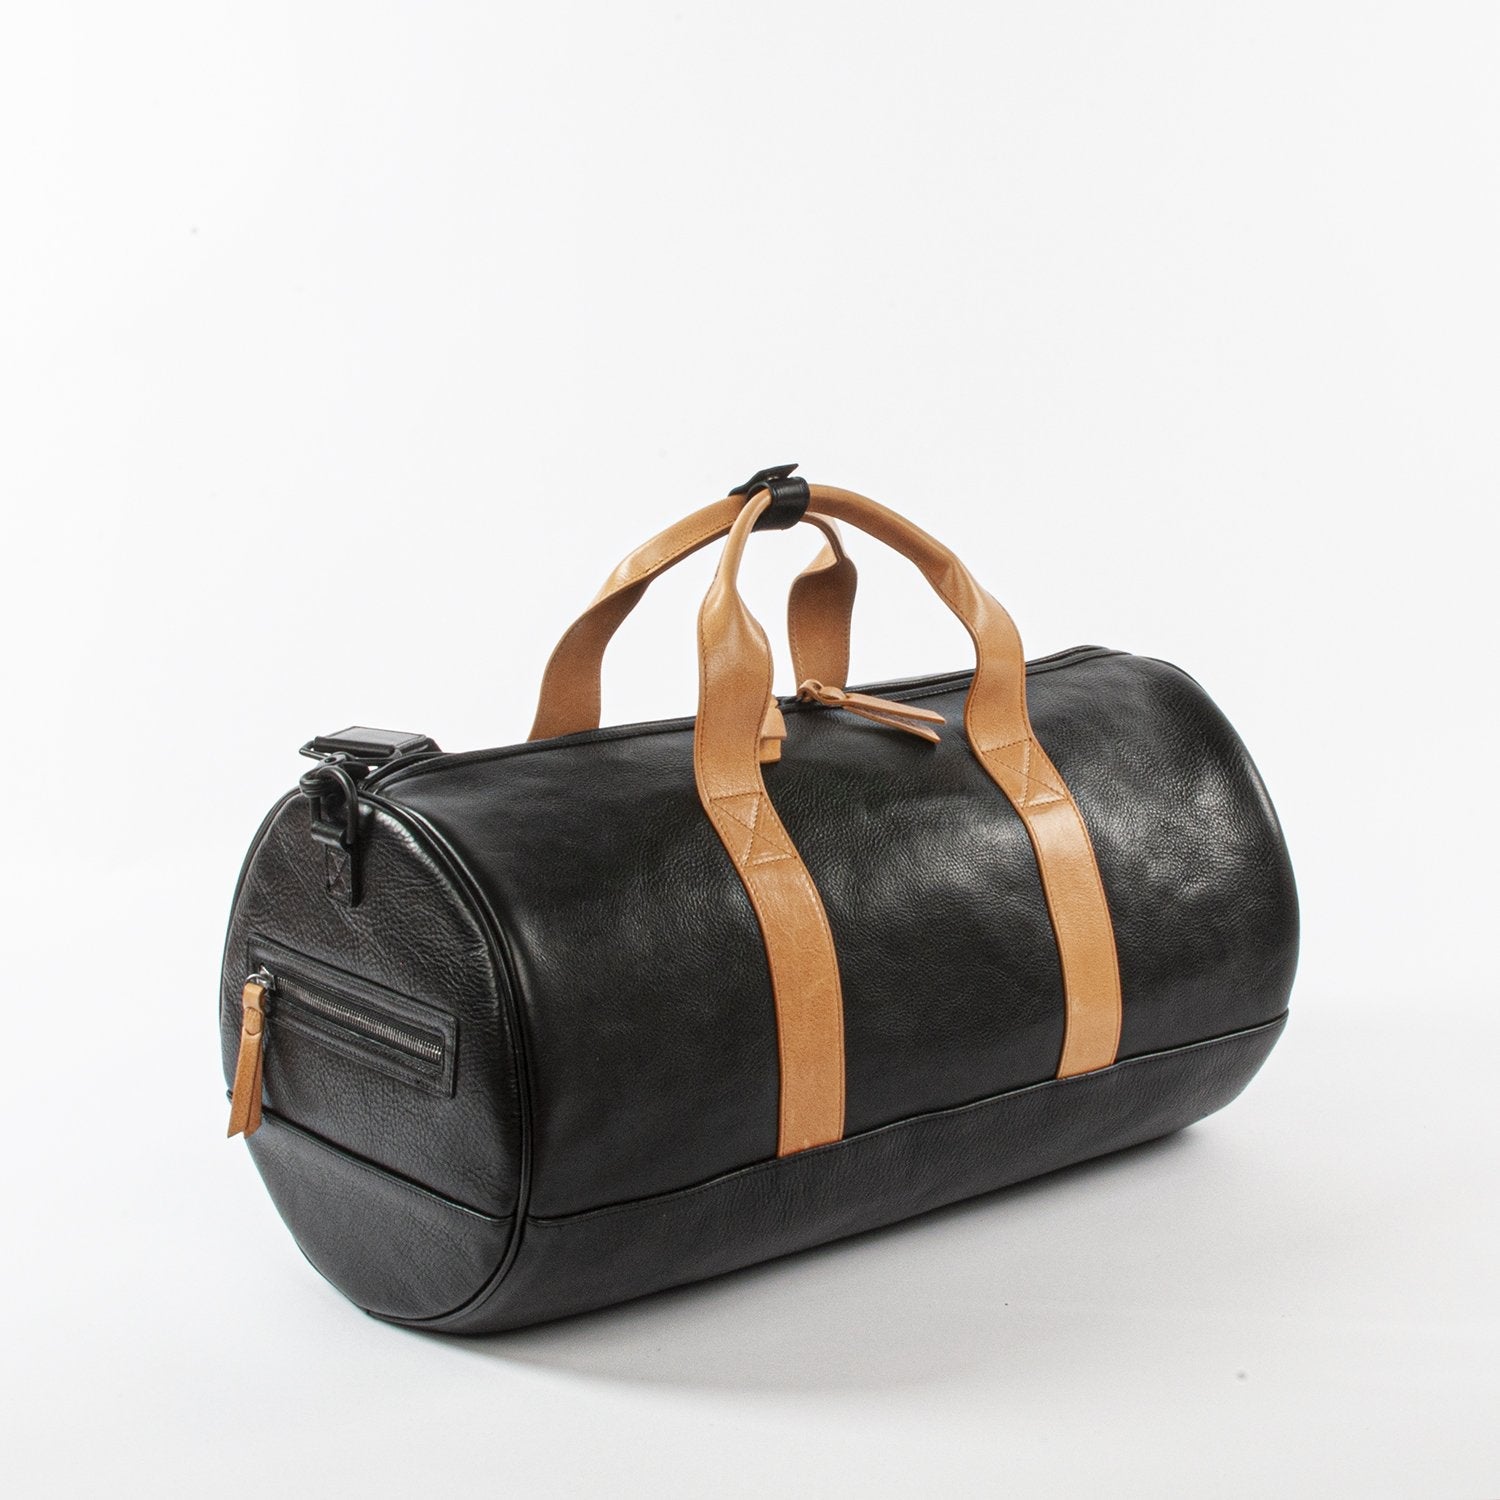 USA Pro Rucksack | Bags, Handbags on sale, Chic handbags